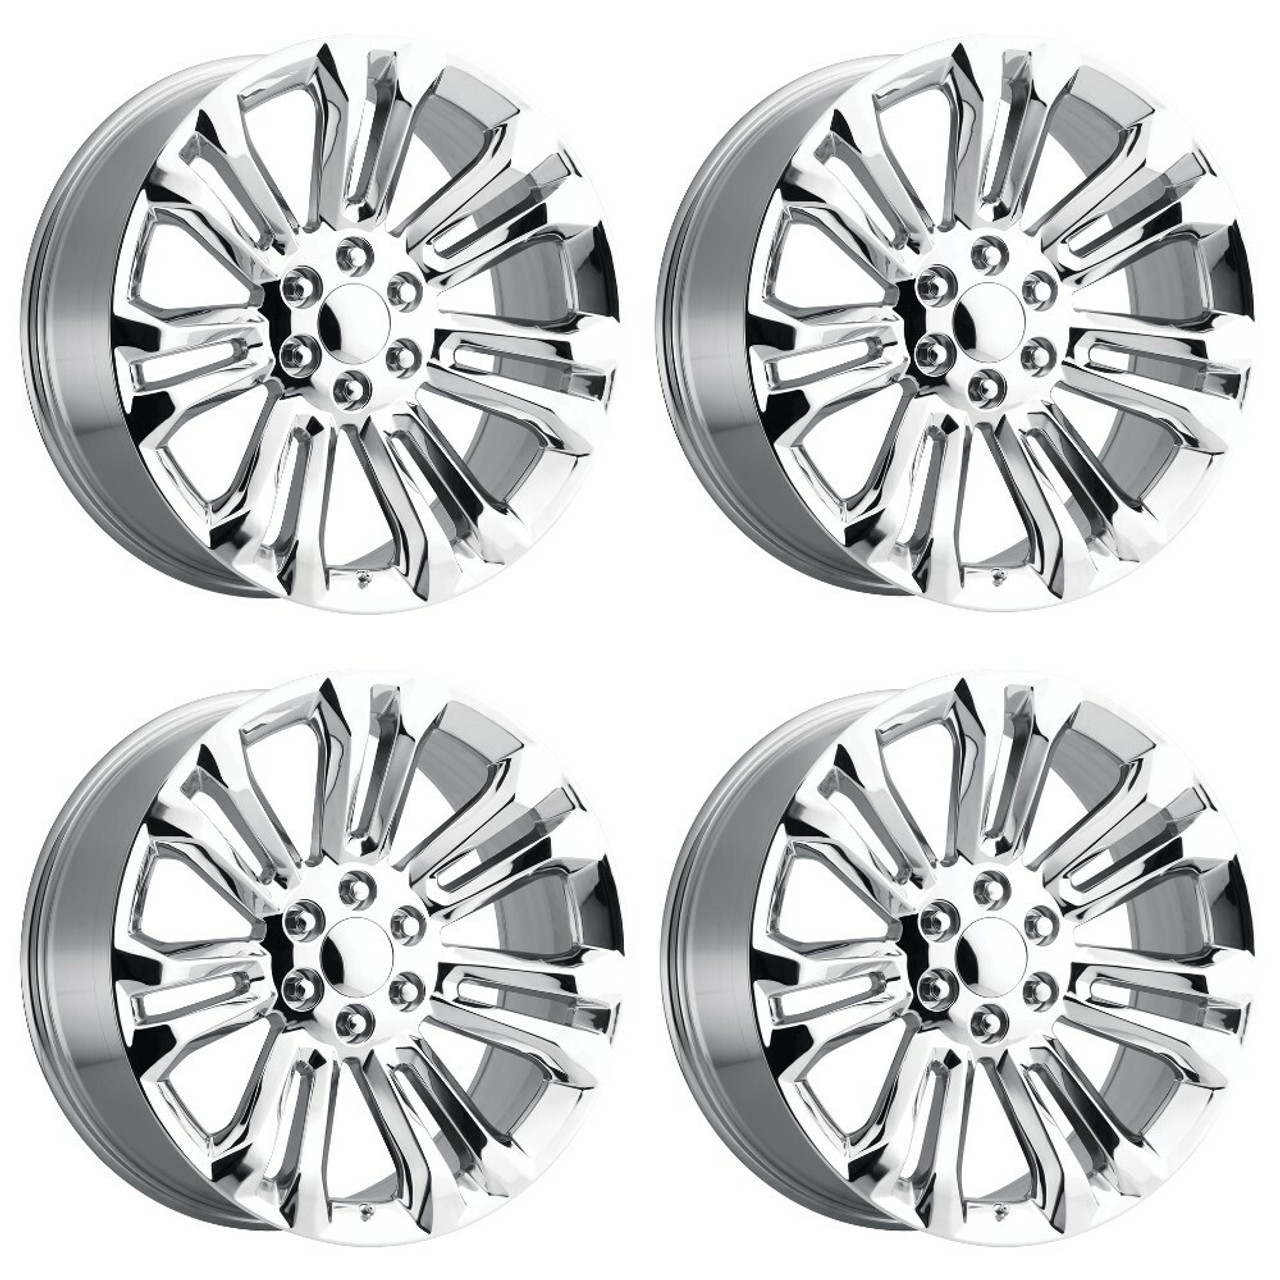 Set 4 Performance Replicas PR205 22x9 6x5.5 Chrome Wheels 22" 24mm Rims